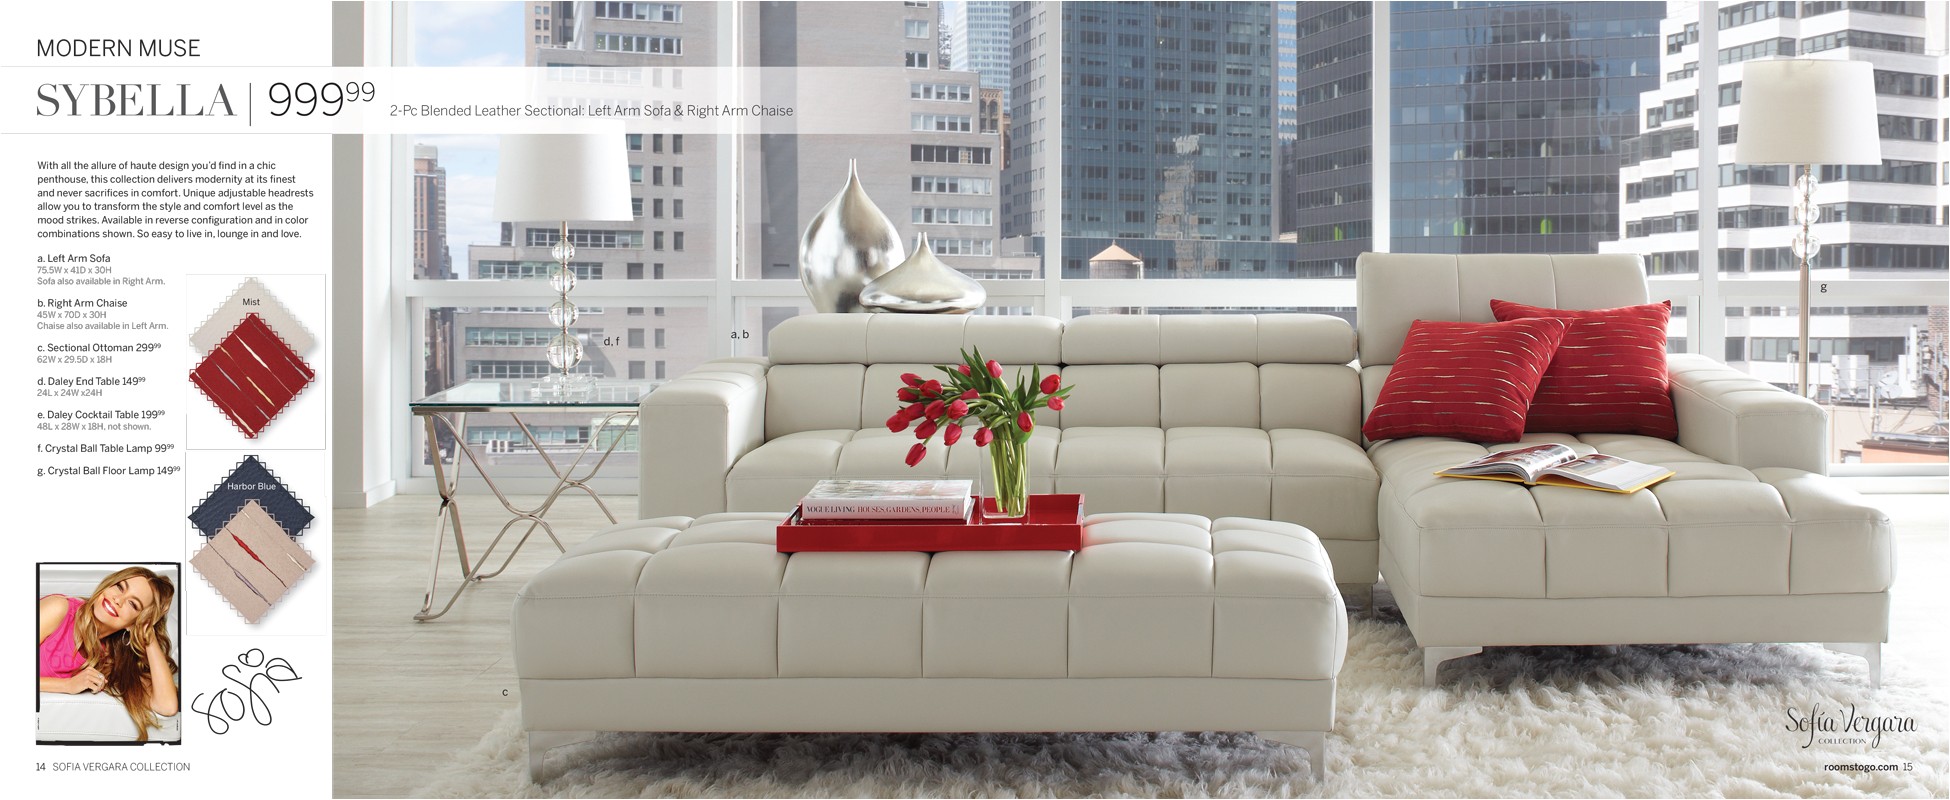 full size of sofia vergara sofa collection leather collectionsofia rooms to go lume creative sofas center